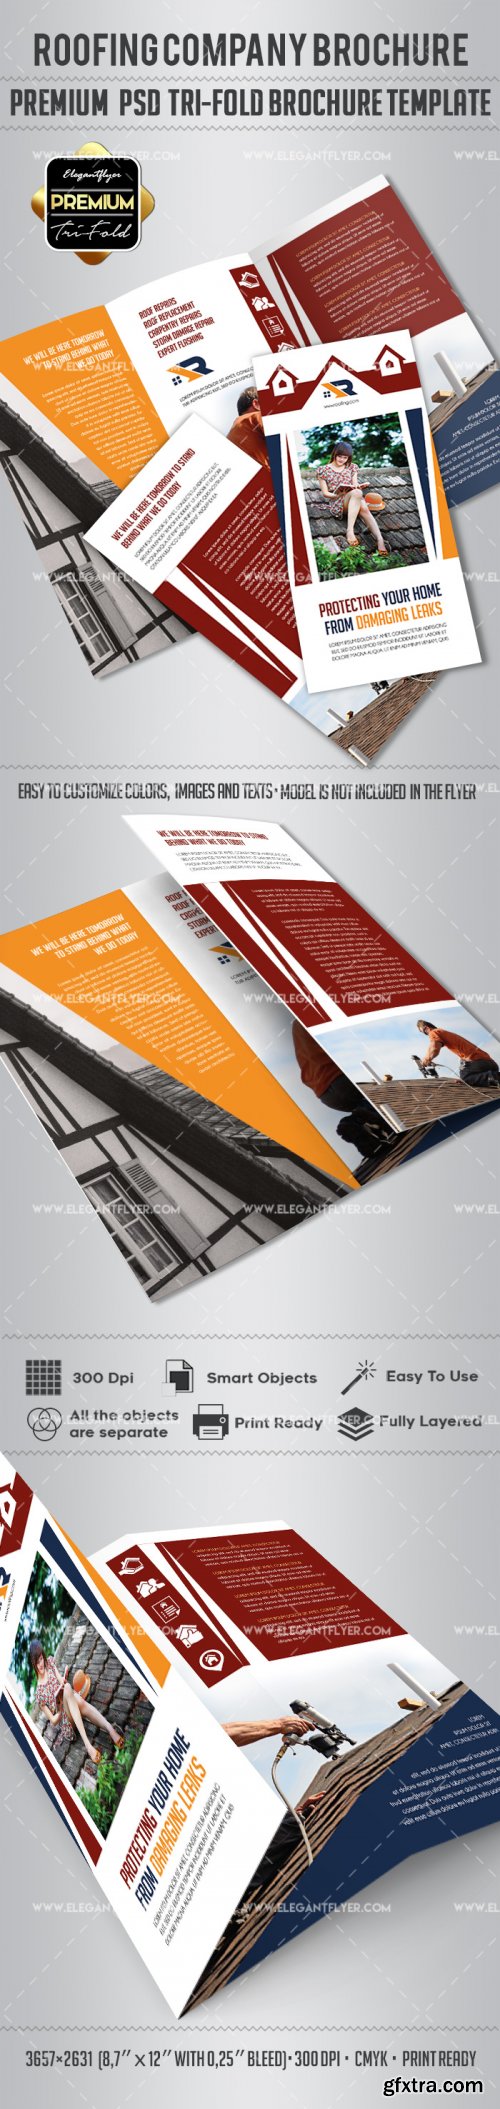 Roofing Company V1 2018 Premium Tri-Fold PSD Brochure Template